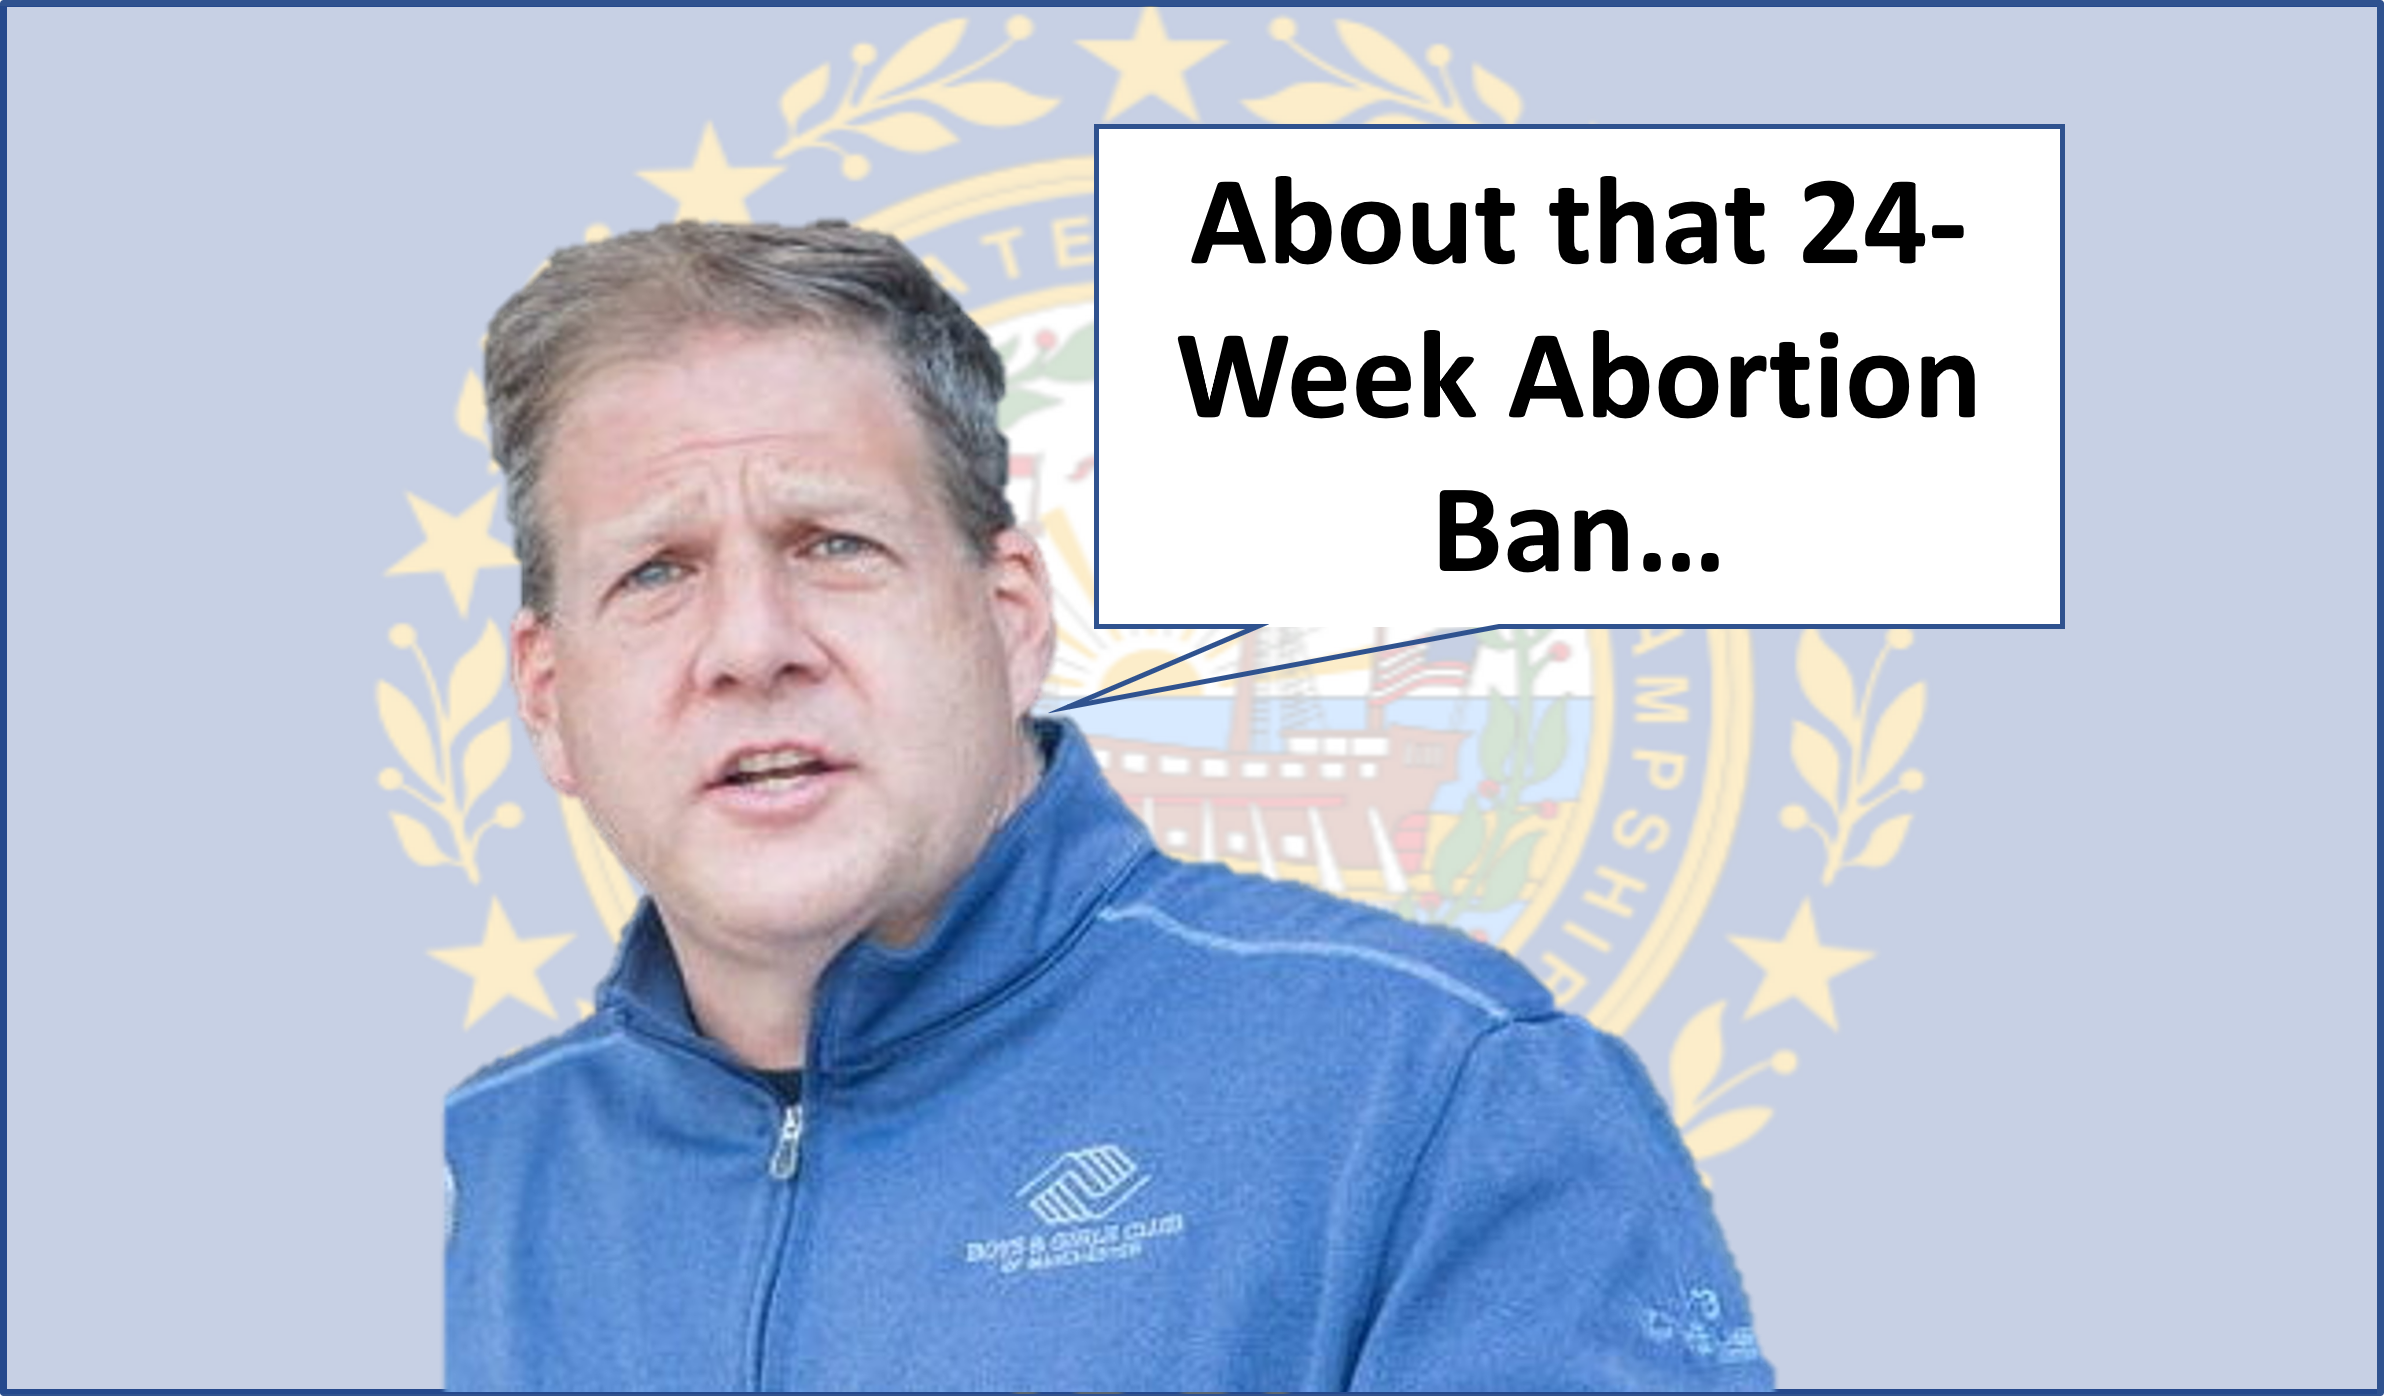 Sununun 24-week abortion ban word bubble